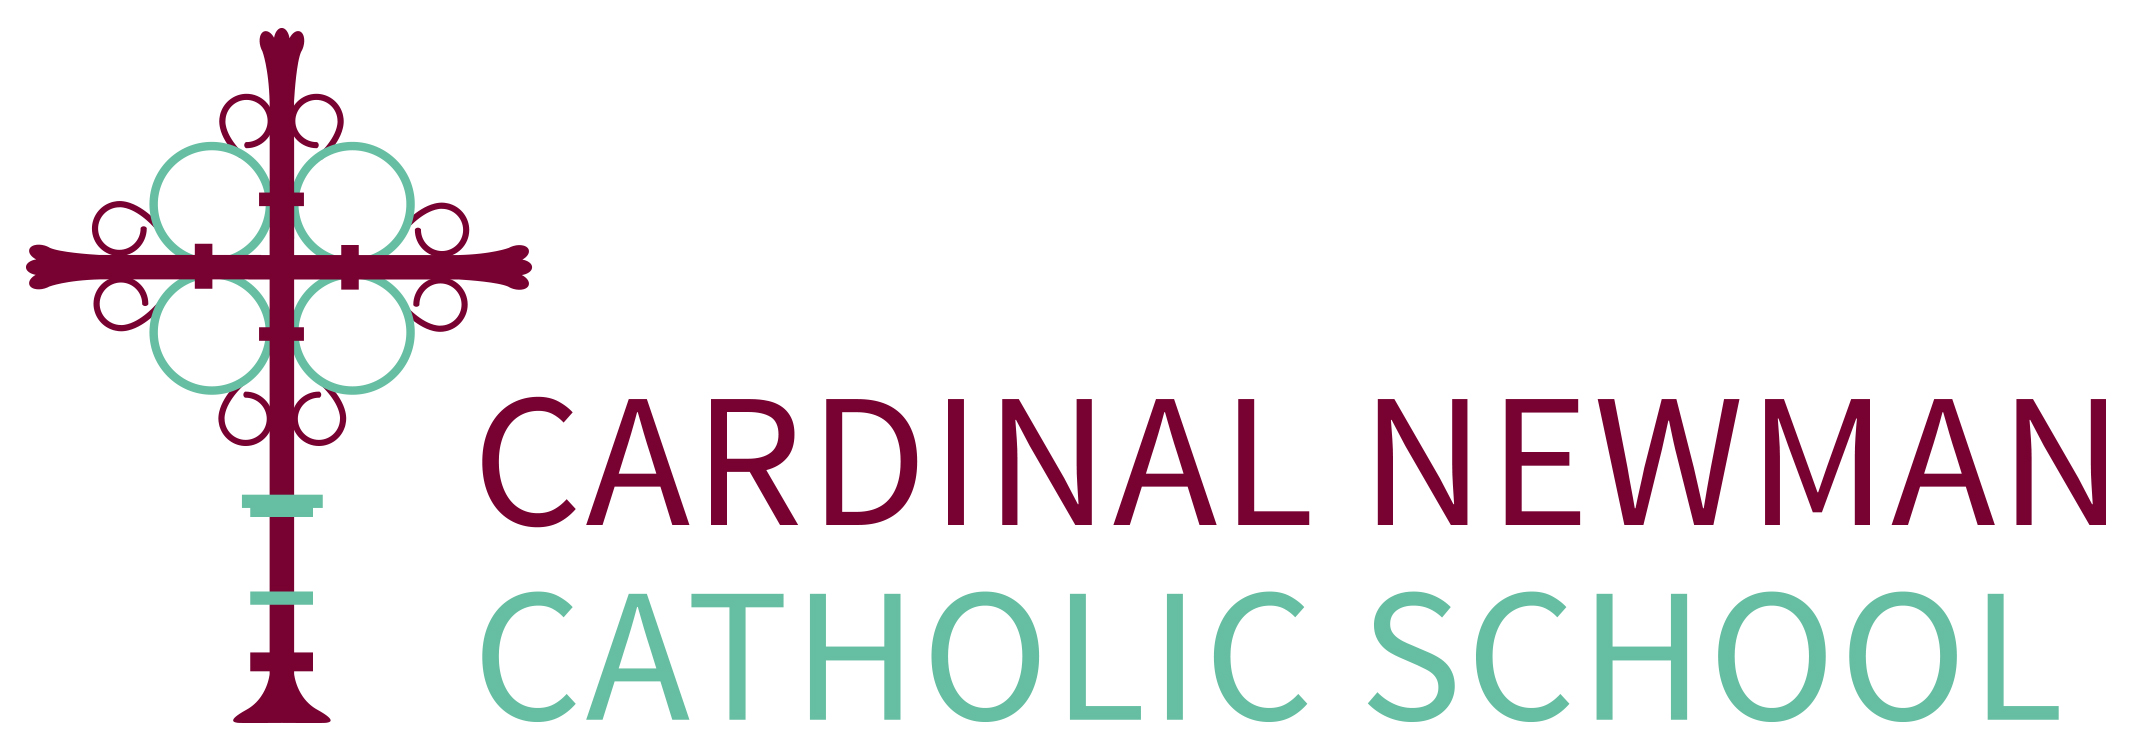 Cardinal newman school brighton jobs